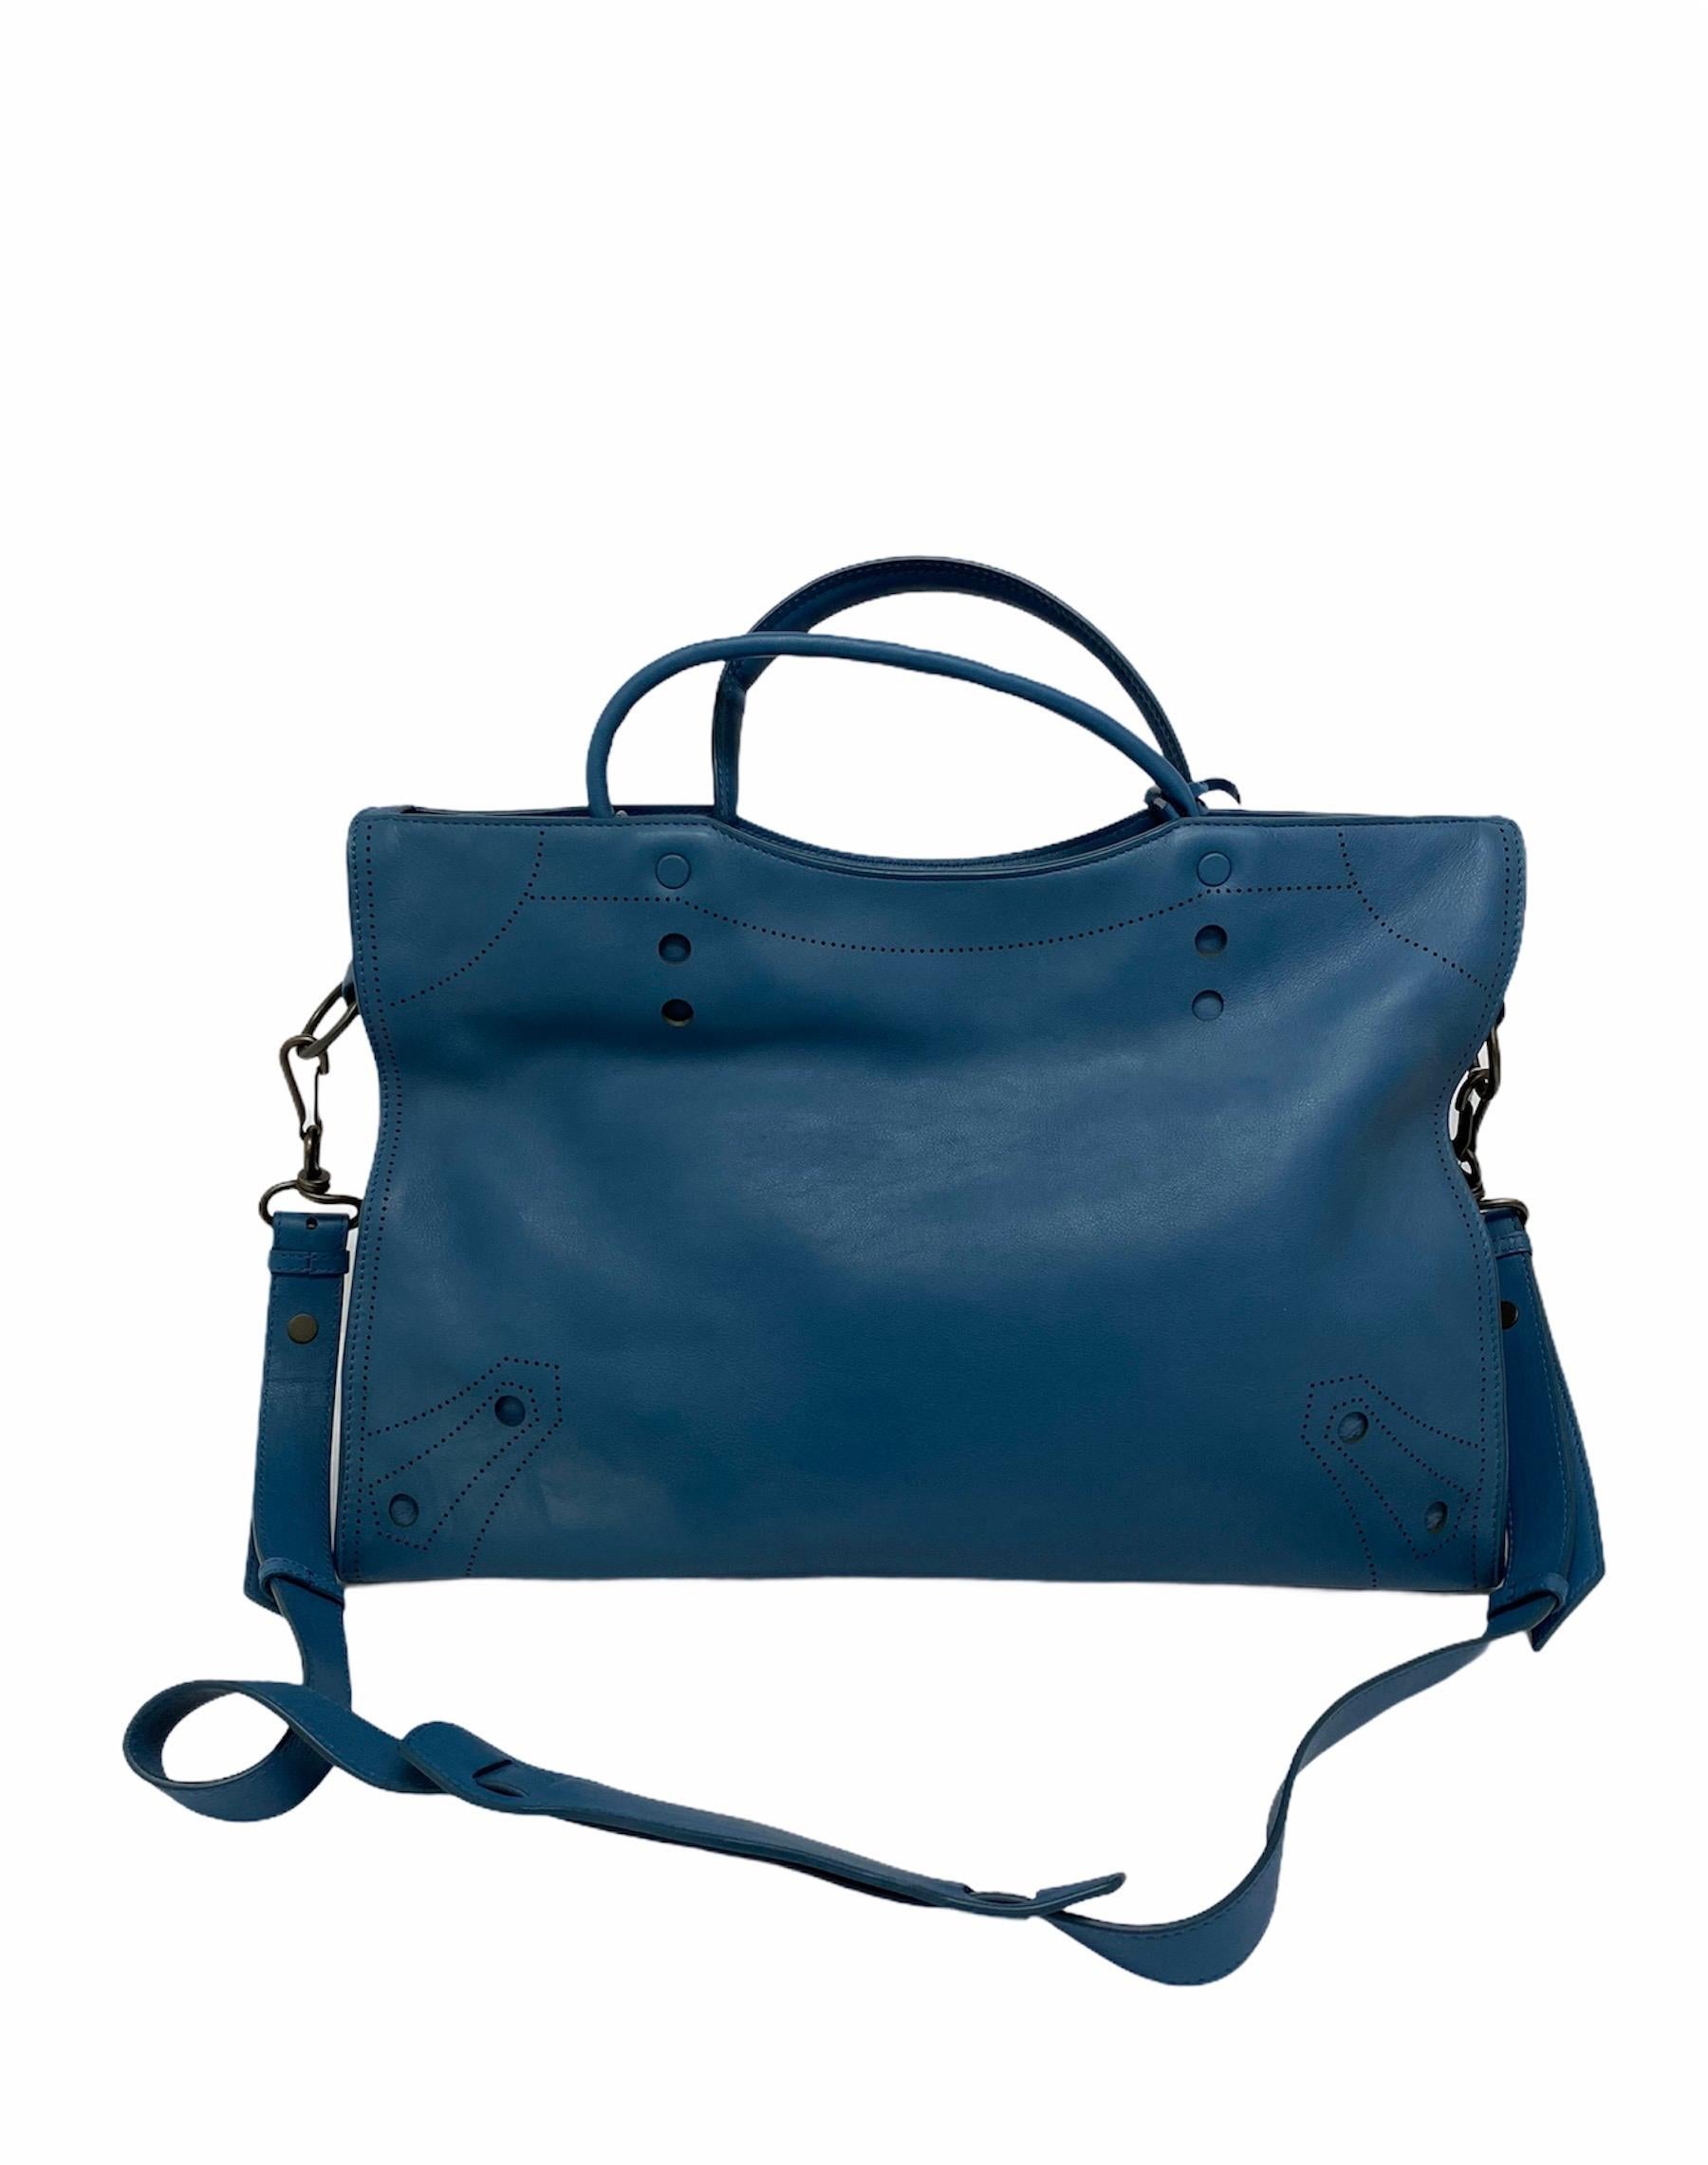 Balenciaga Blue Leather City Bag 3